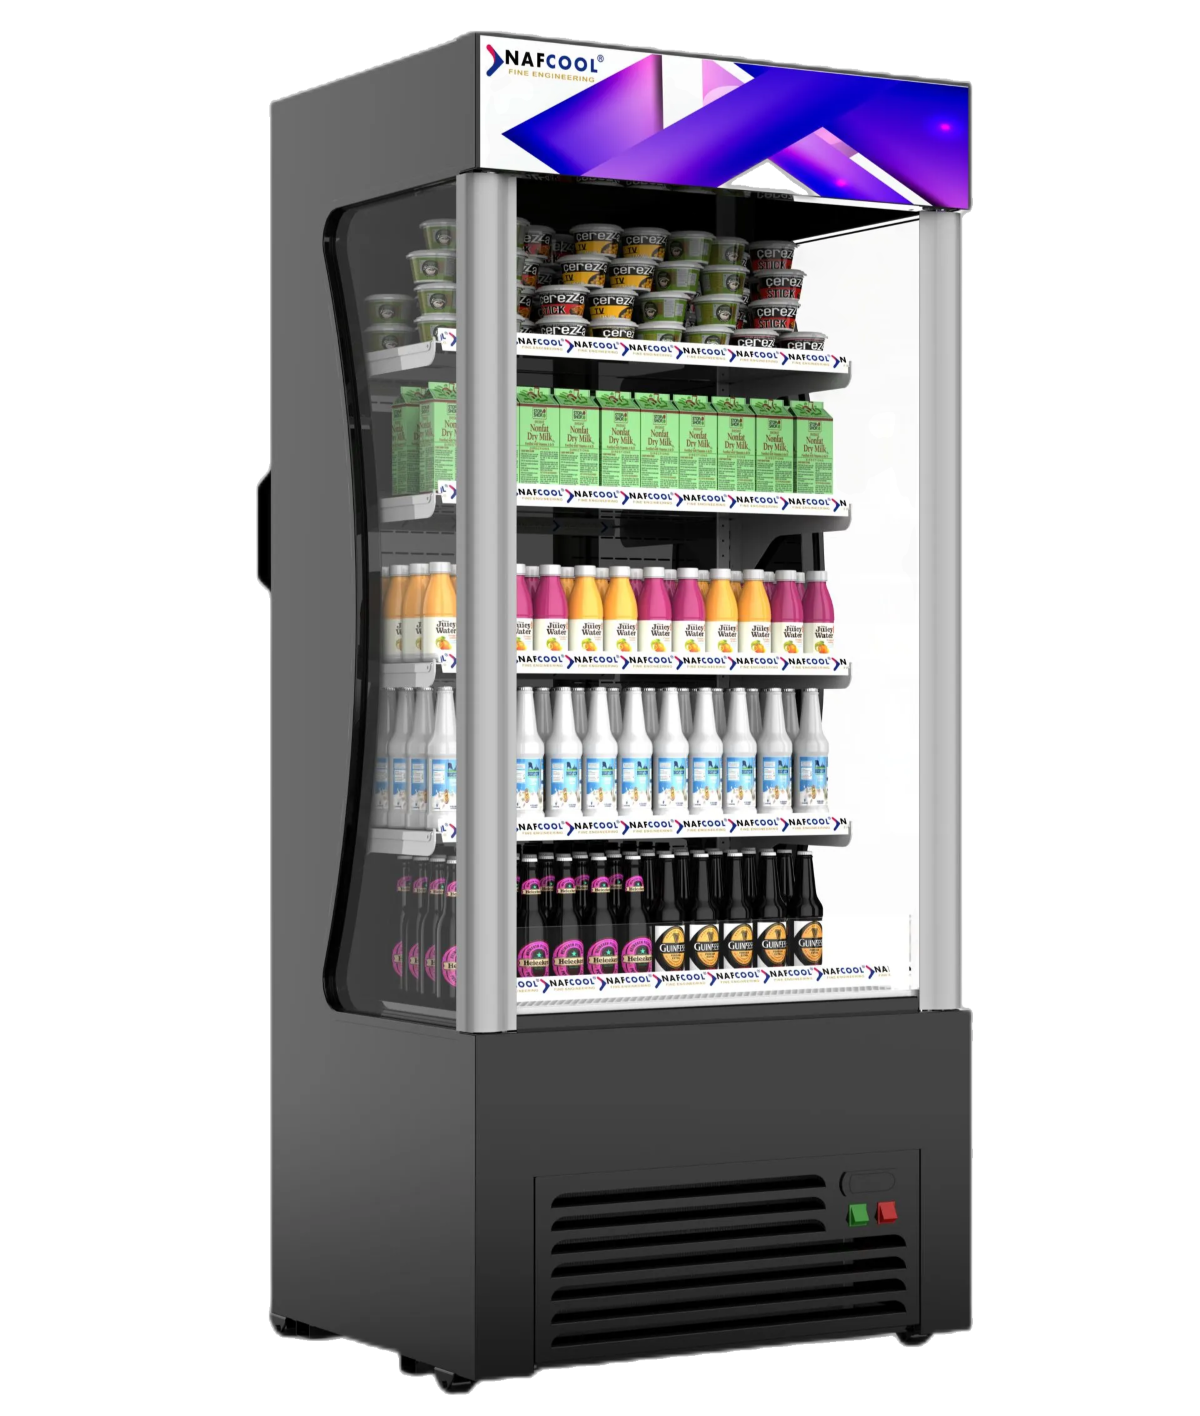 OFC36 Open Air Merchandiser Refrigerator Display Cooler